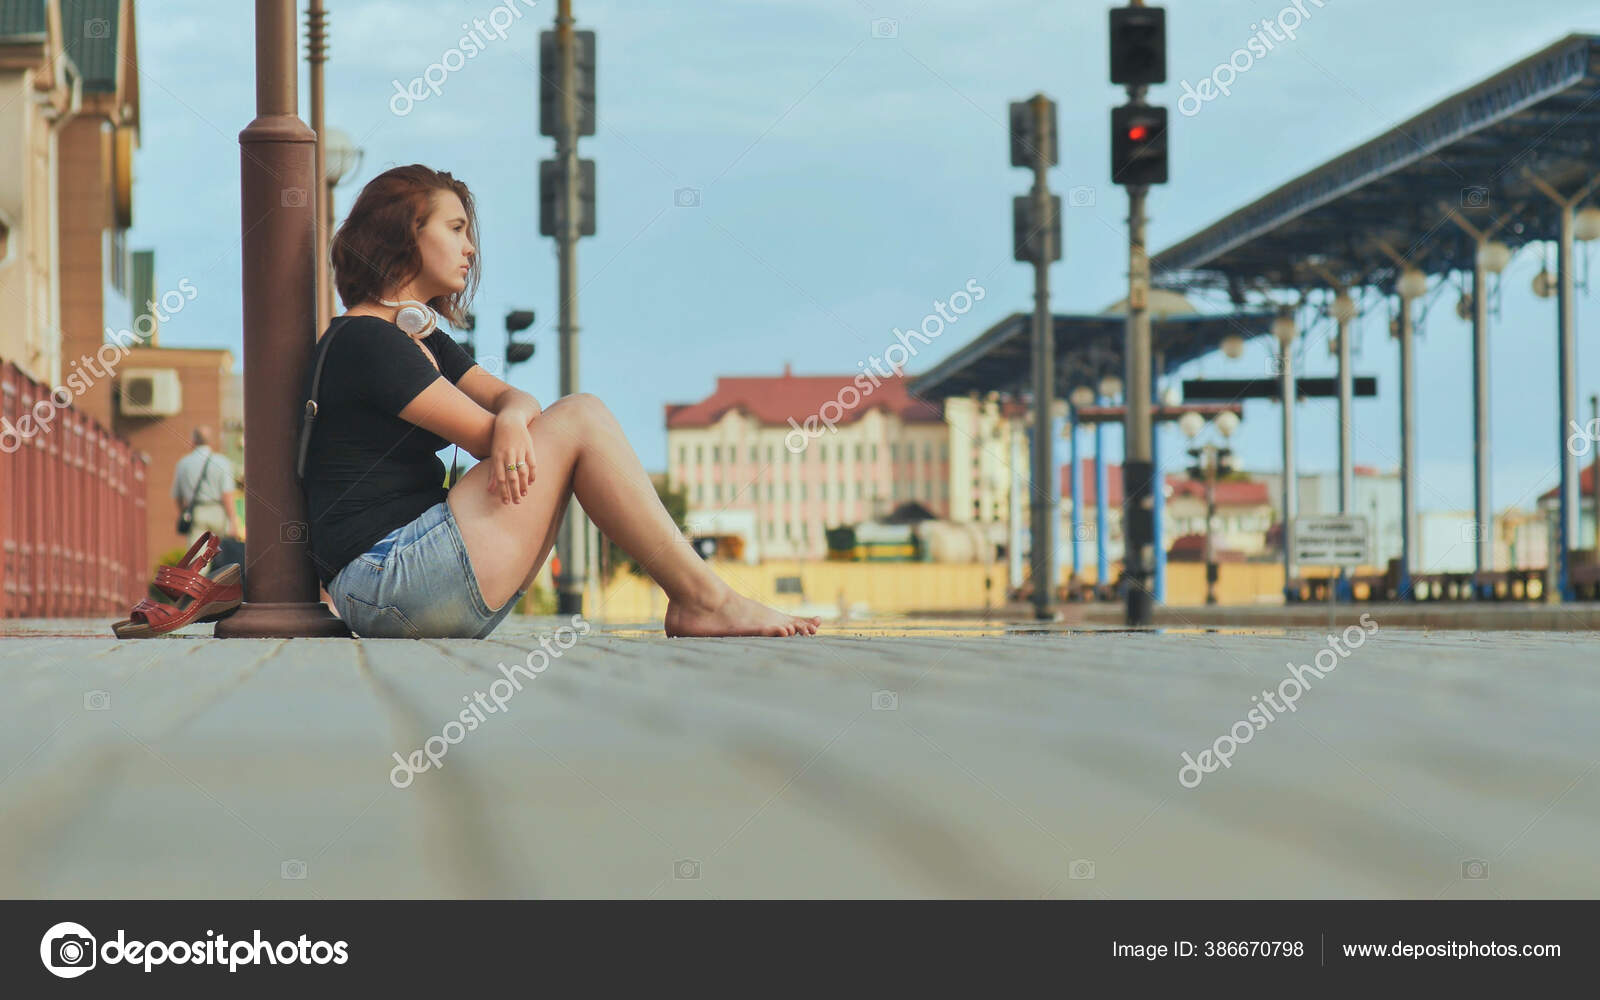 https://st4.depositphotos.com/6894706/38667/i/1600/depositphotos_386670798-stock-photo-sad-girl-sitting-on-the.jpg